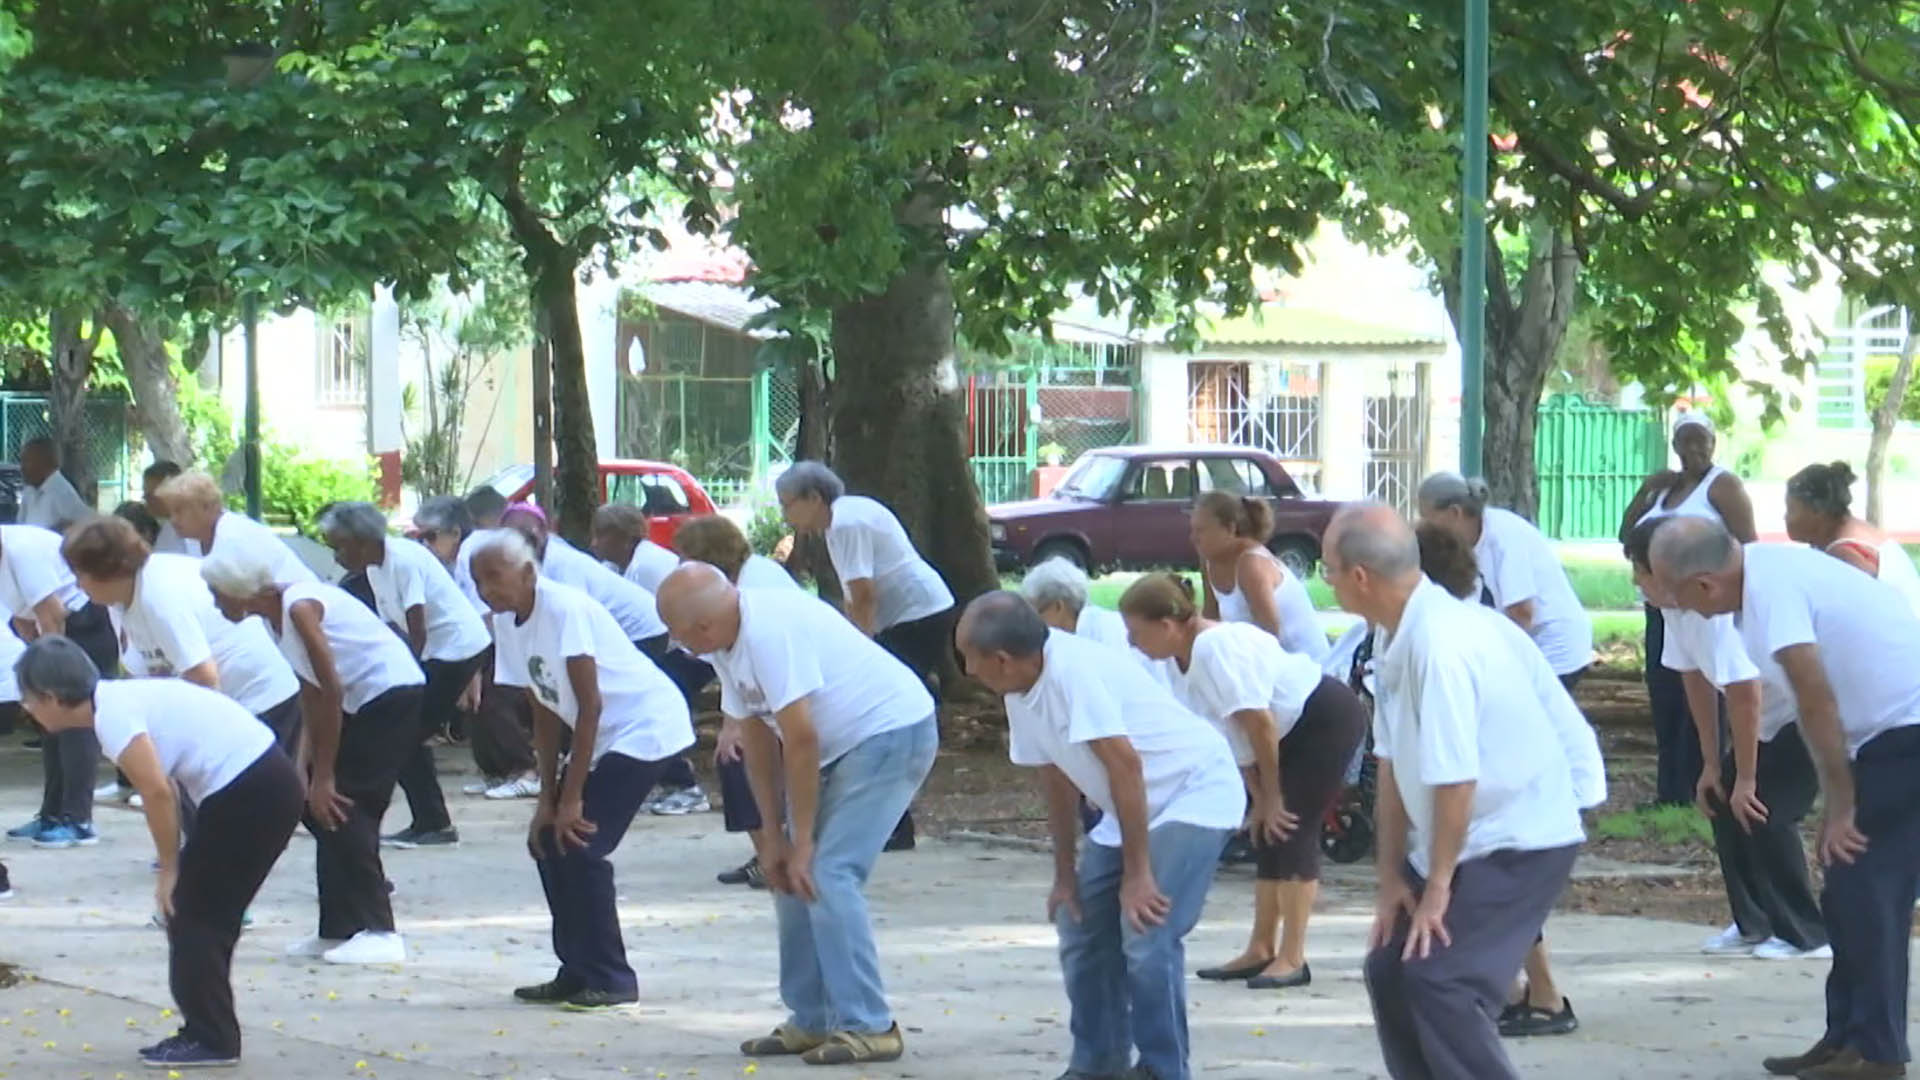 Cuba’s surprising number of centenarians